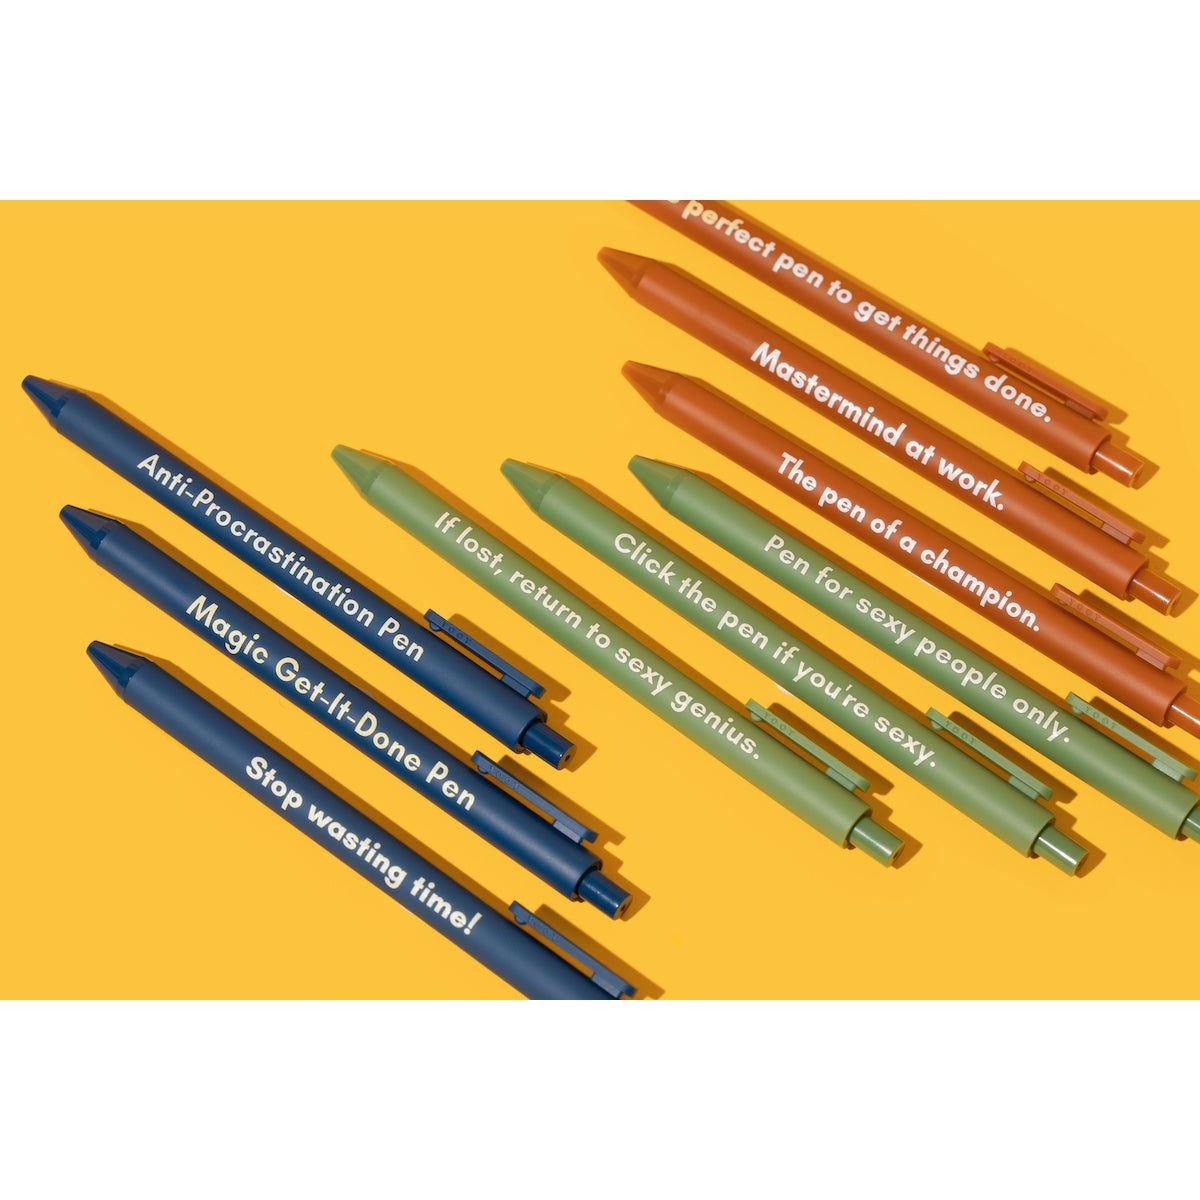 Anti-Procrastination Pen Set 💡 | Gel Click Pen Gift Set | 3 Pens in Navy